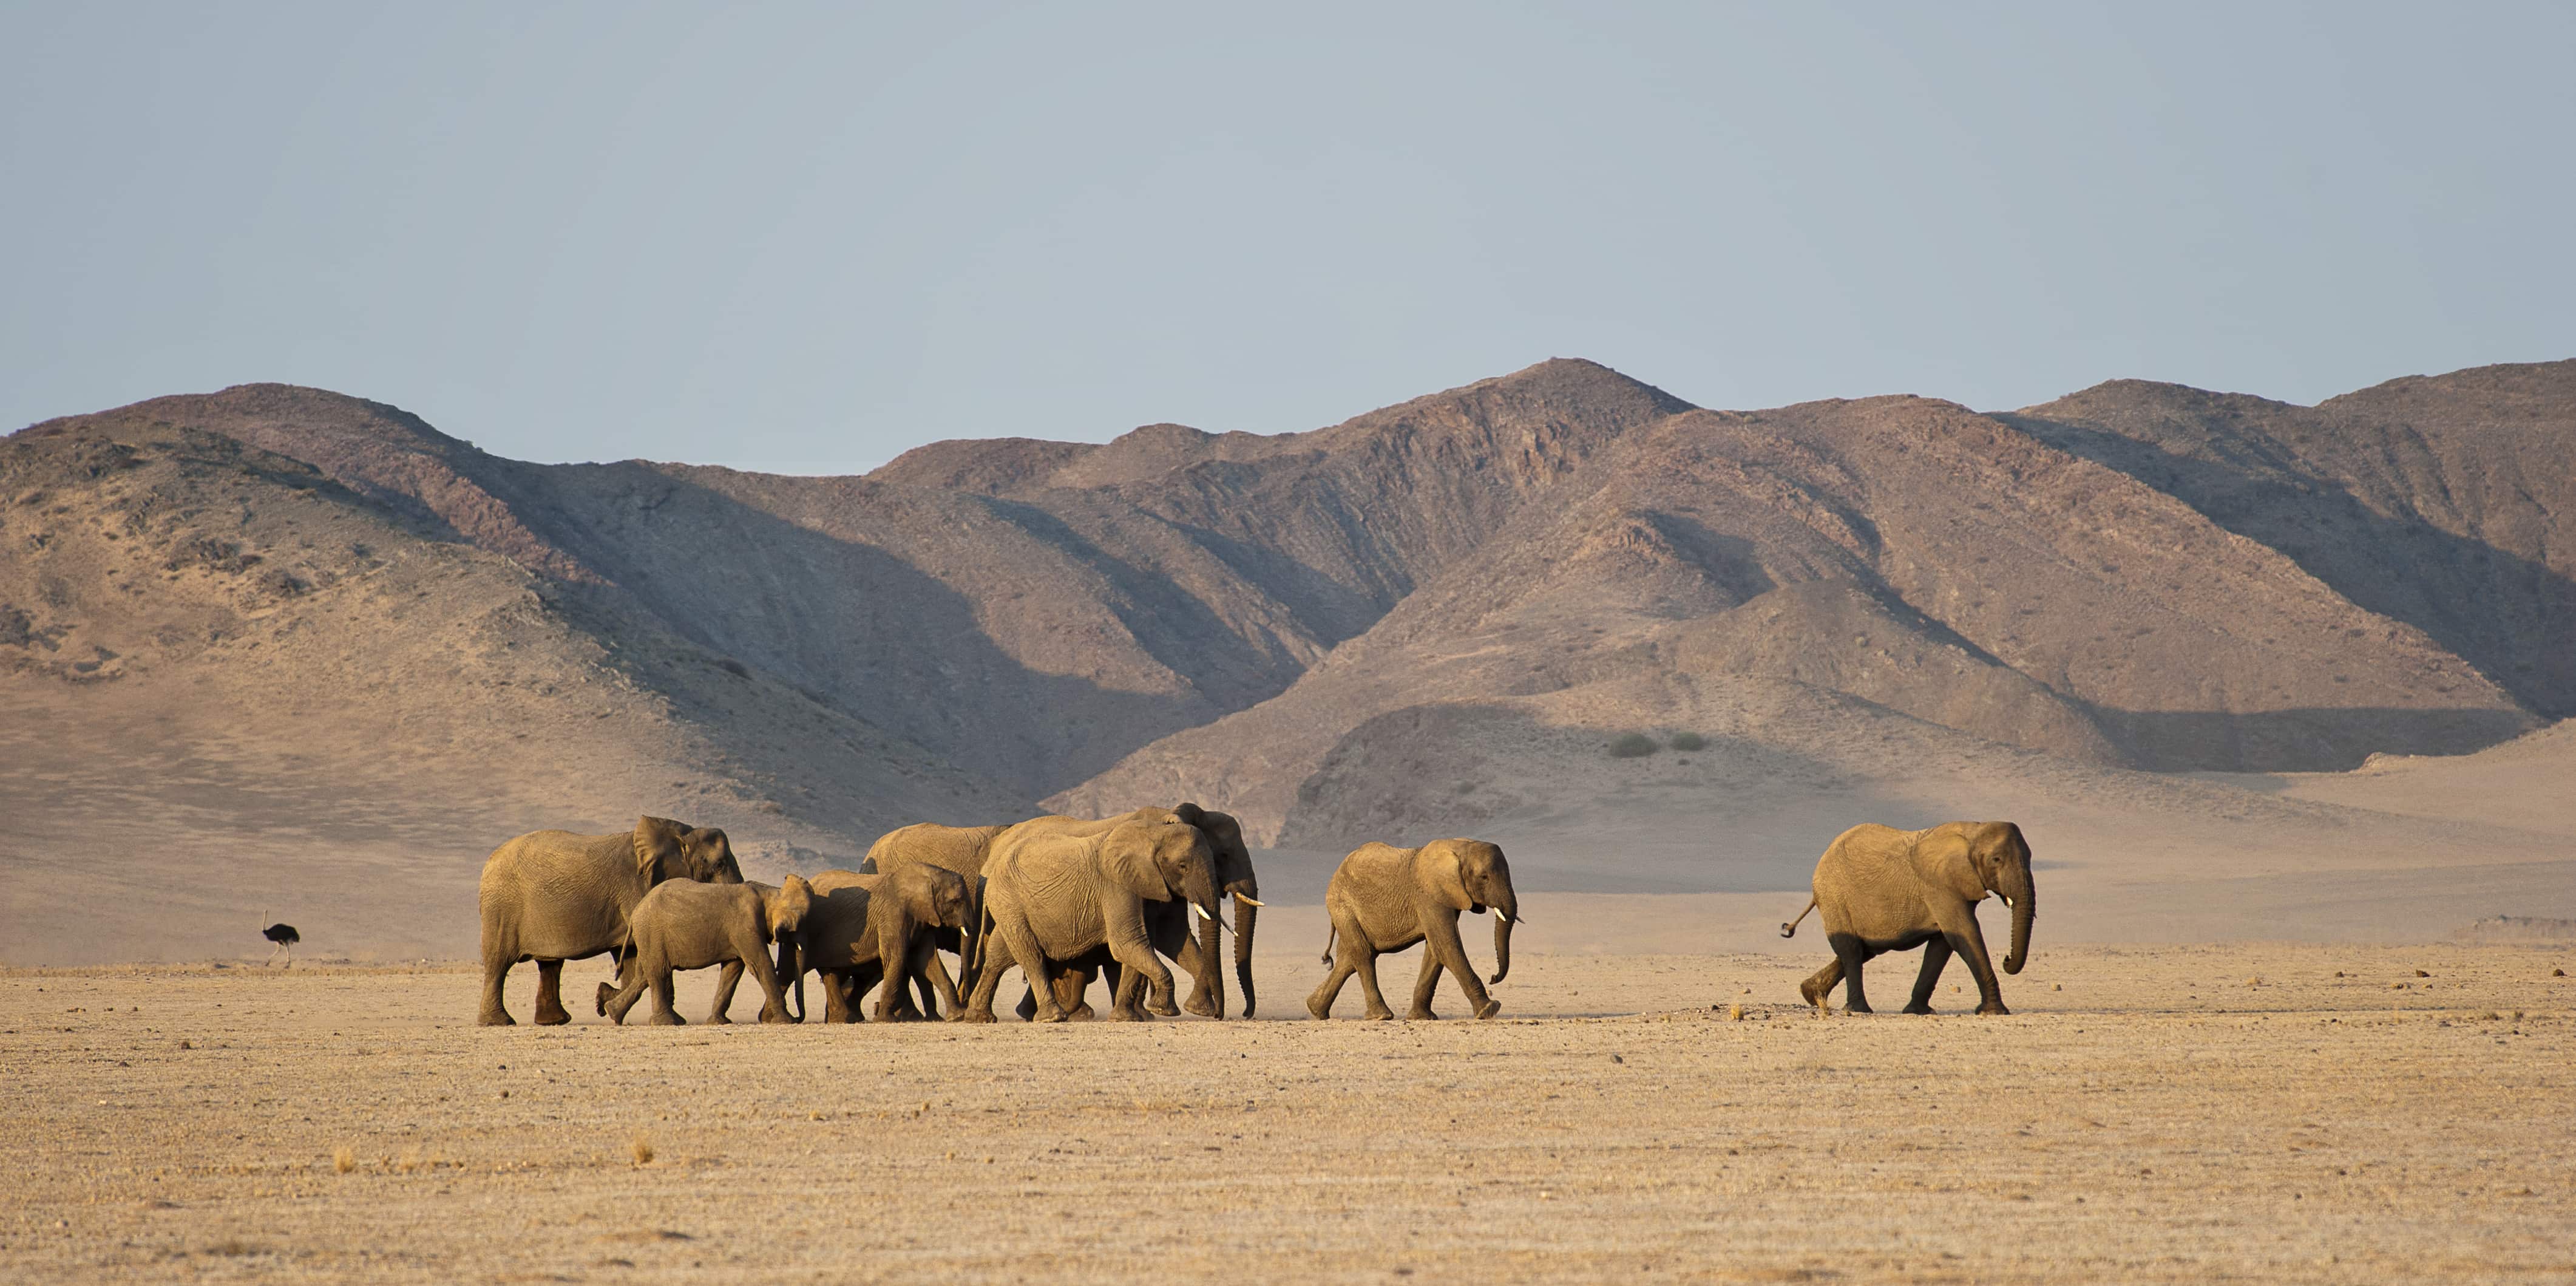 DESERT CREATURES – GROUND ANIMALS IN THE NAMIB DESERT, Safari World Tours